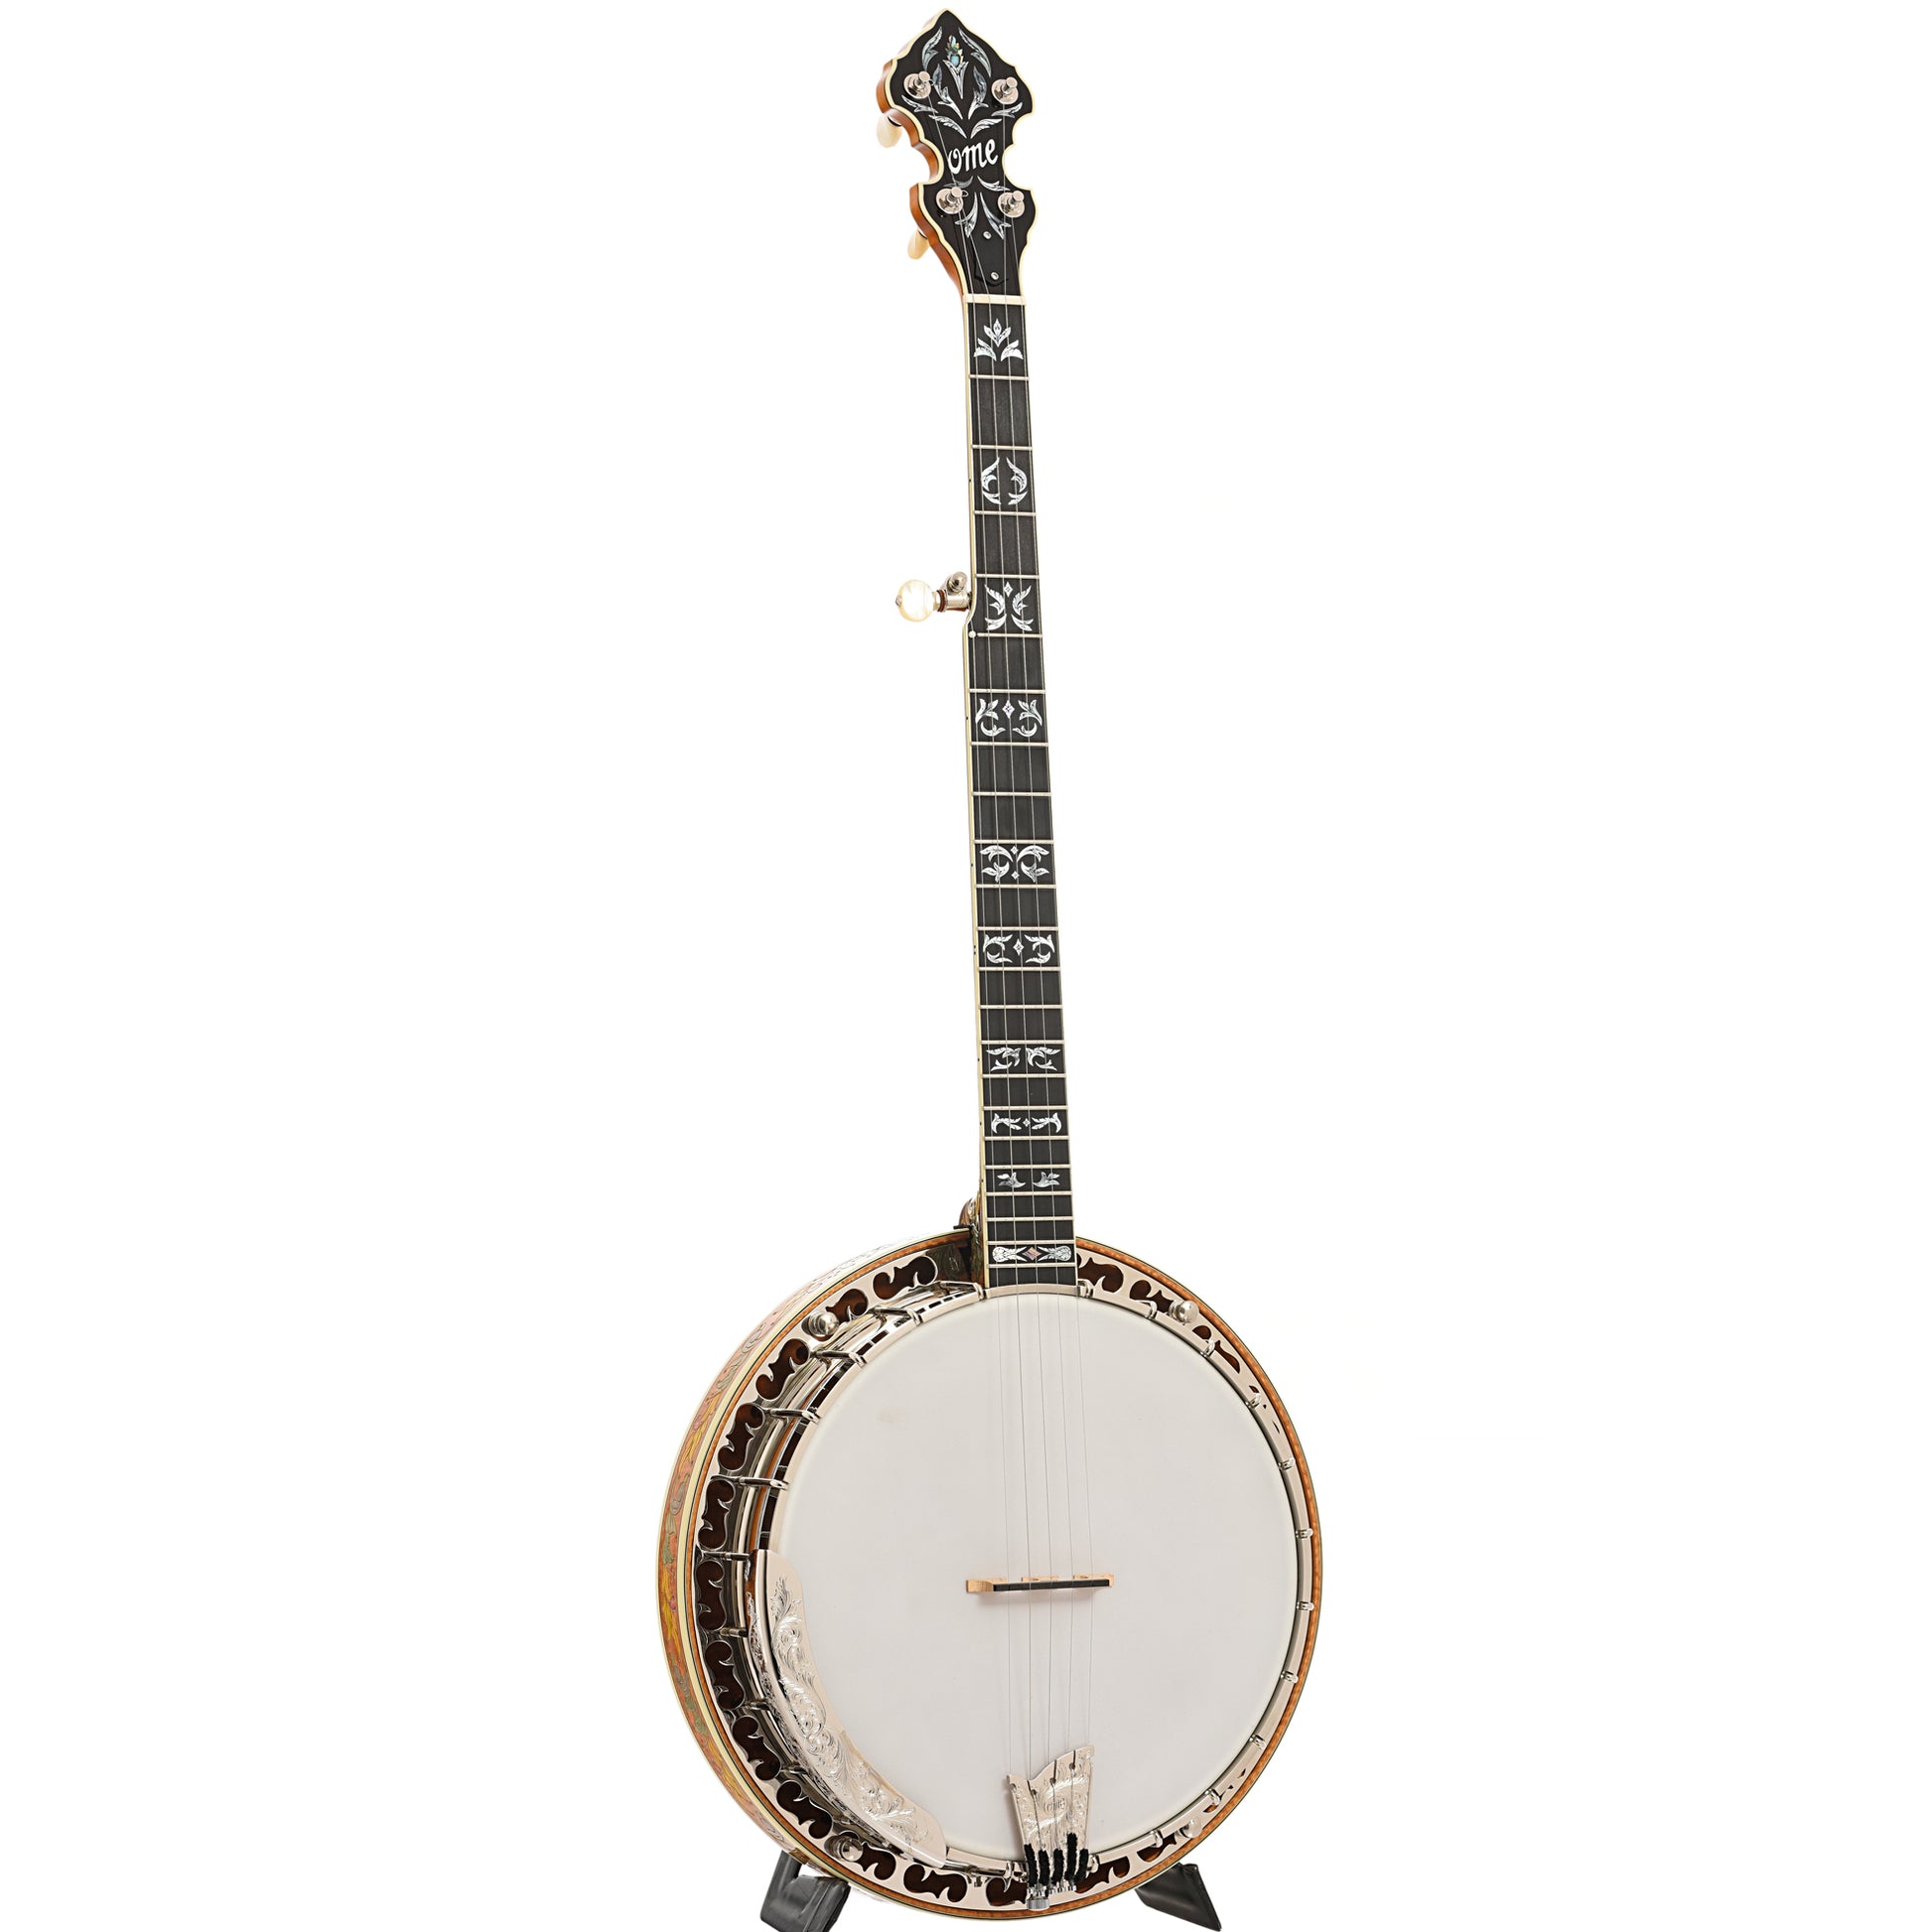 Full front and side of Ome Odyssey Custom Resonator Banjo